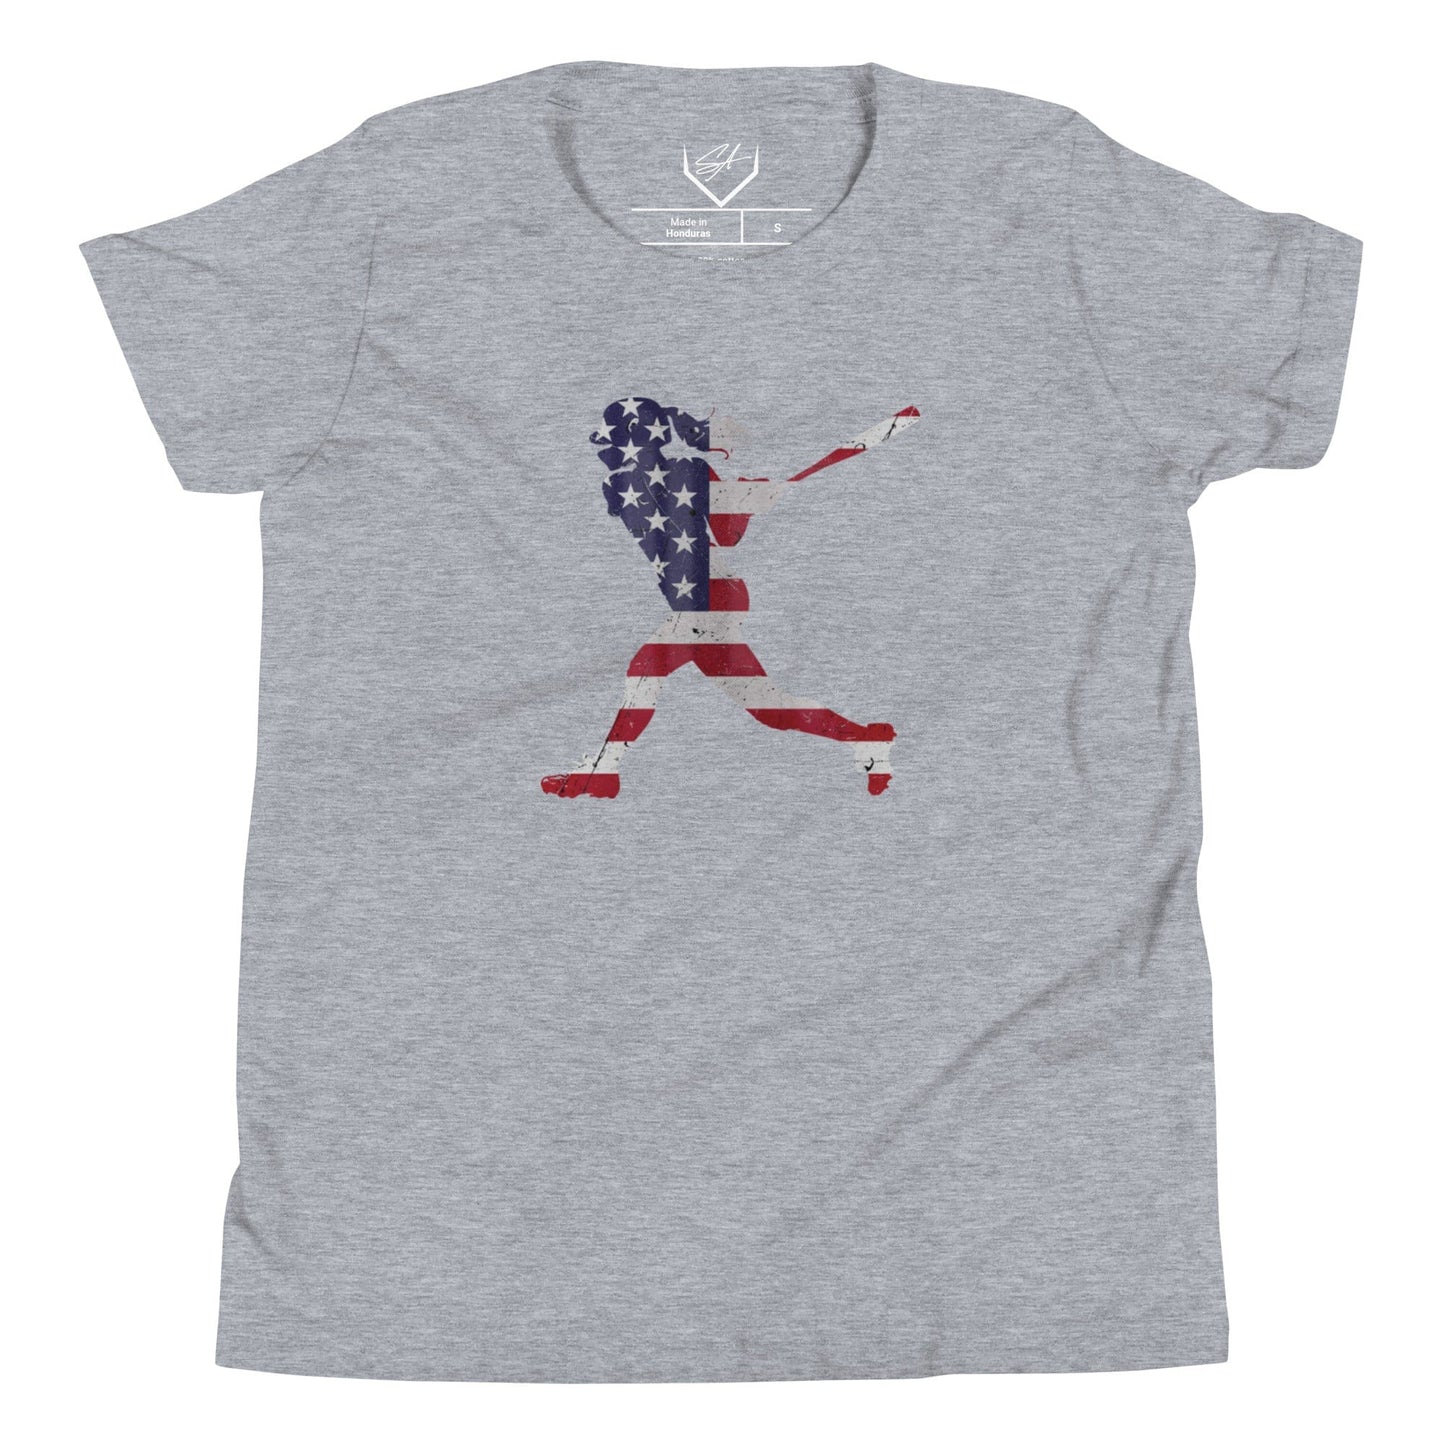 American Flag Softball Batter - Youth Tee